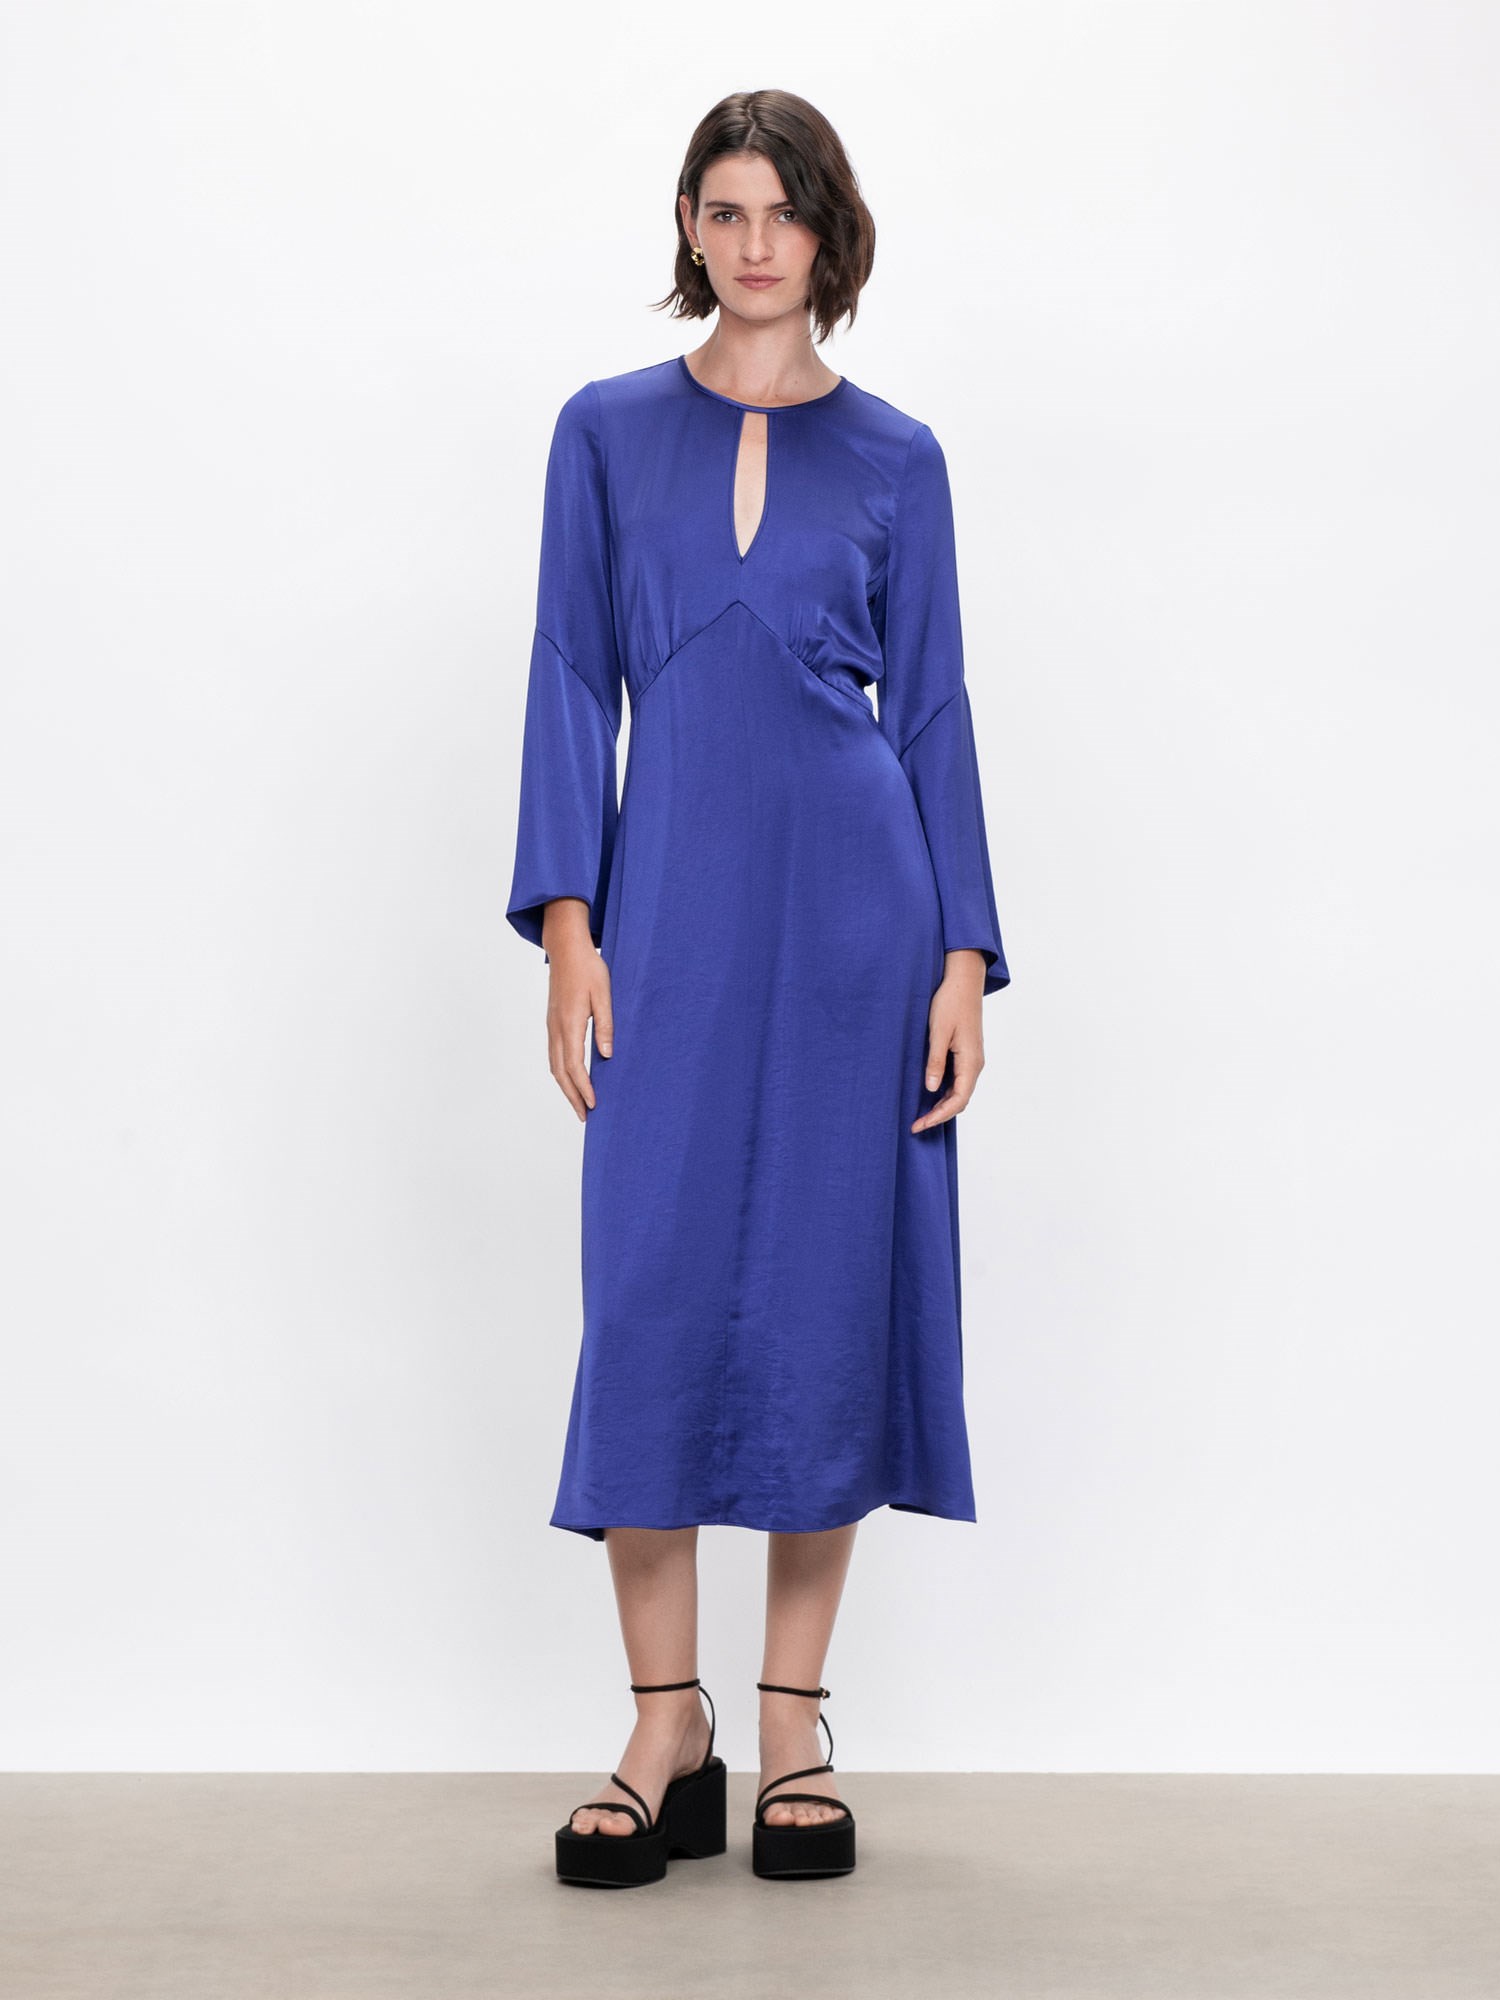 Washer Satin Empire Midi Dress | Buy Dresses Online - Veronika Maine